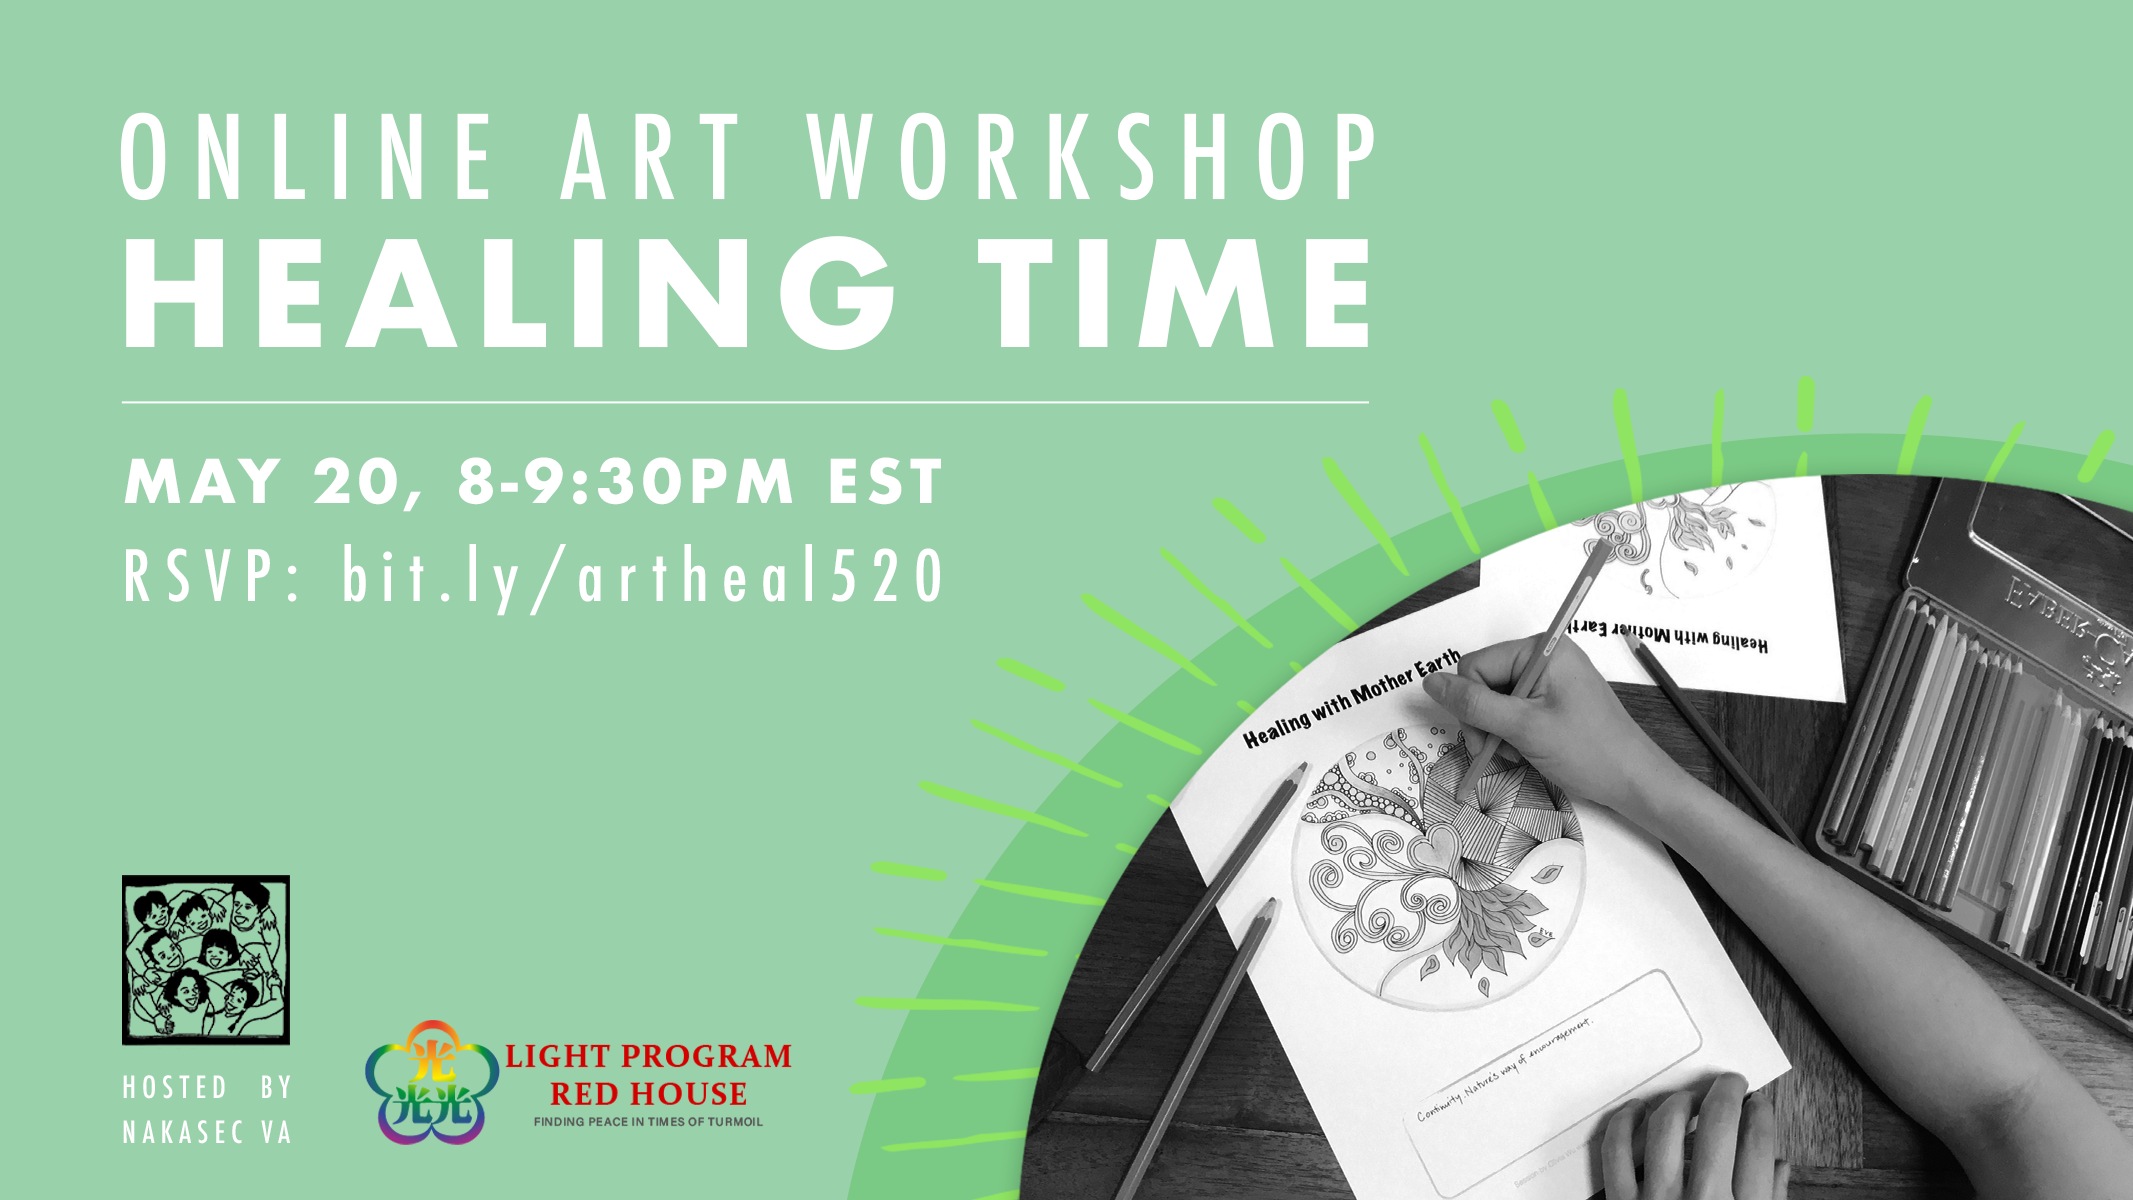 Online Art Workshop - Healing Time event flyer